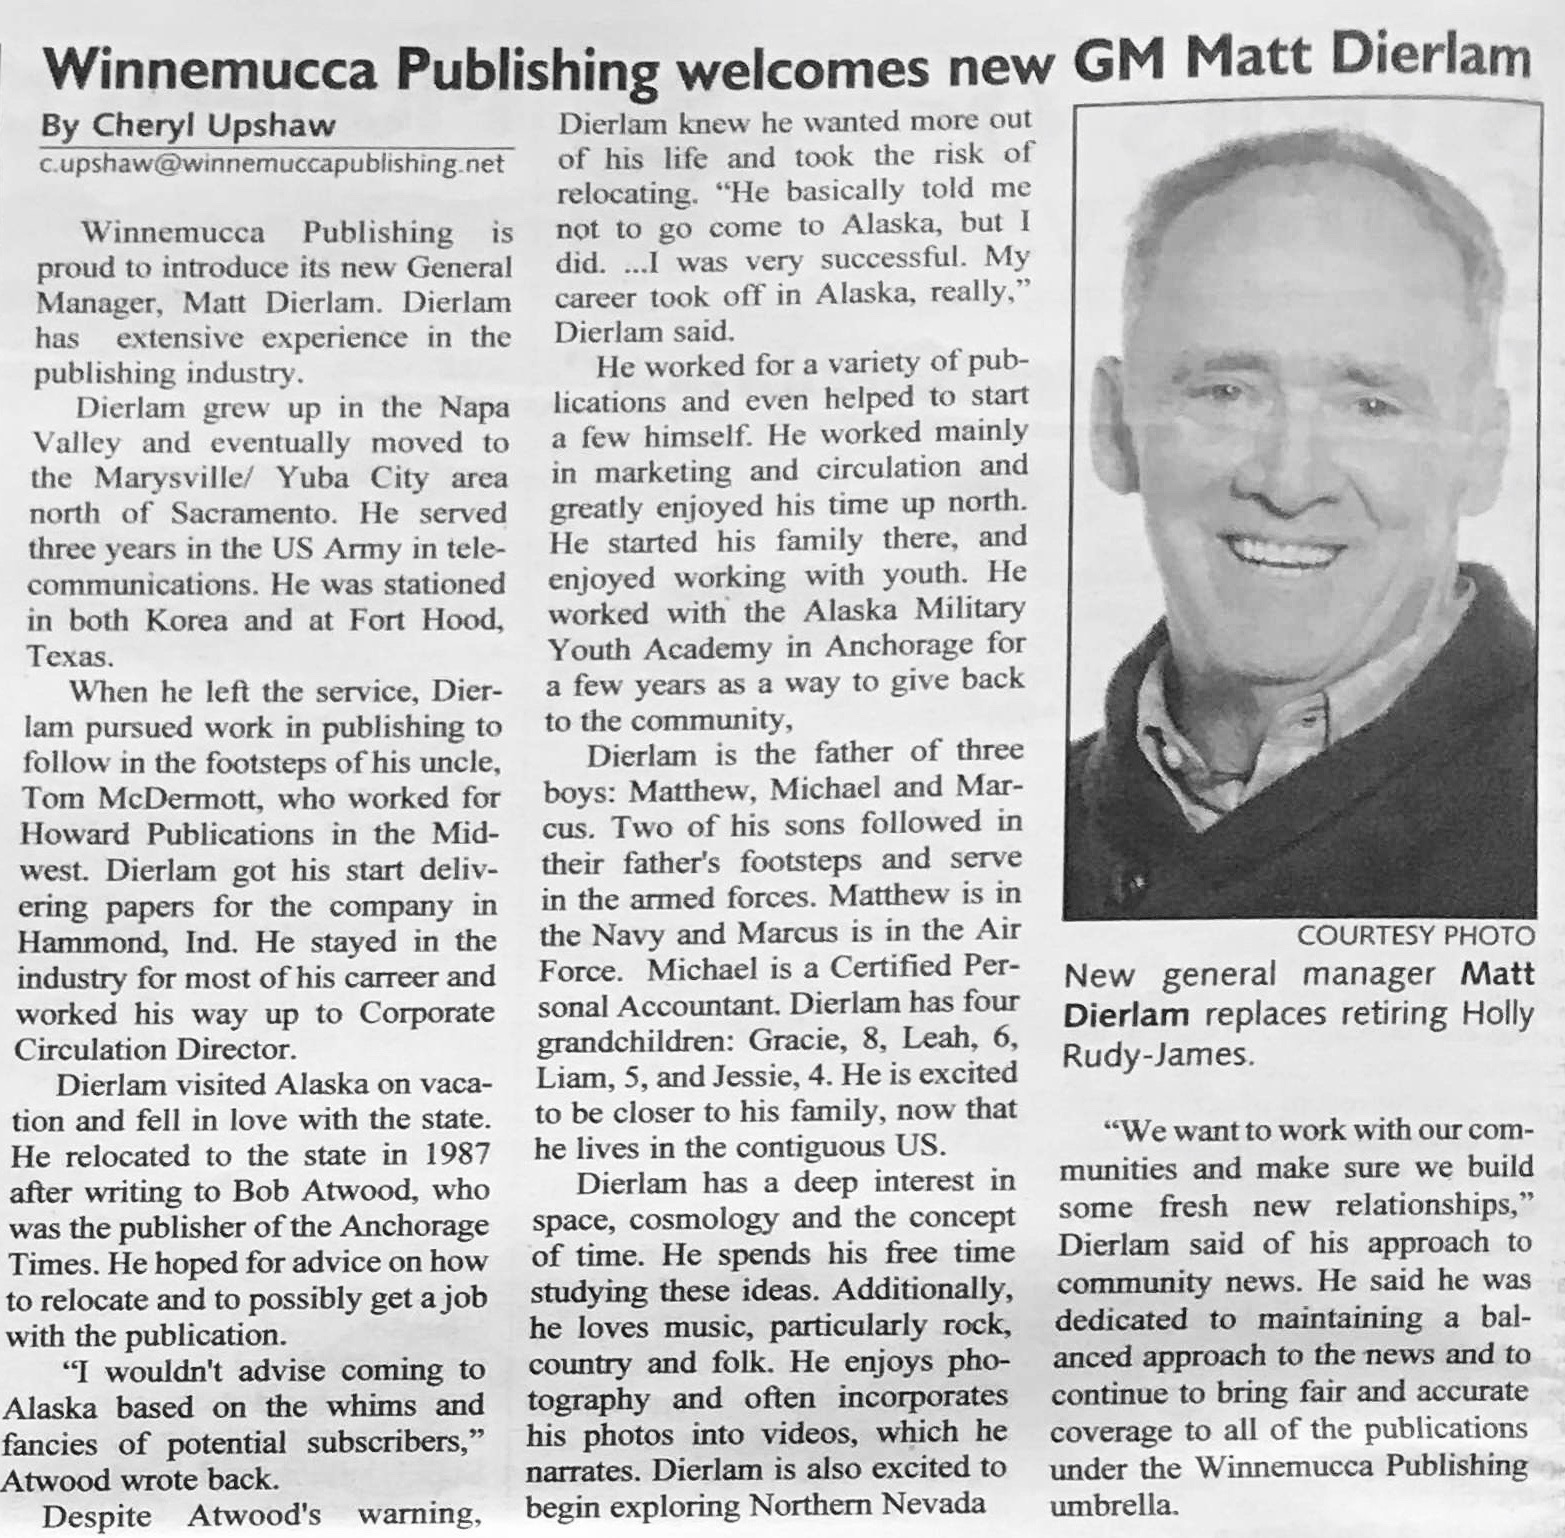 Winnemucca Publishing has new general manager Nevada Press Association